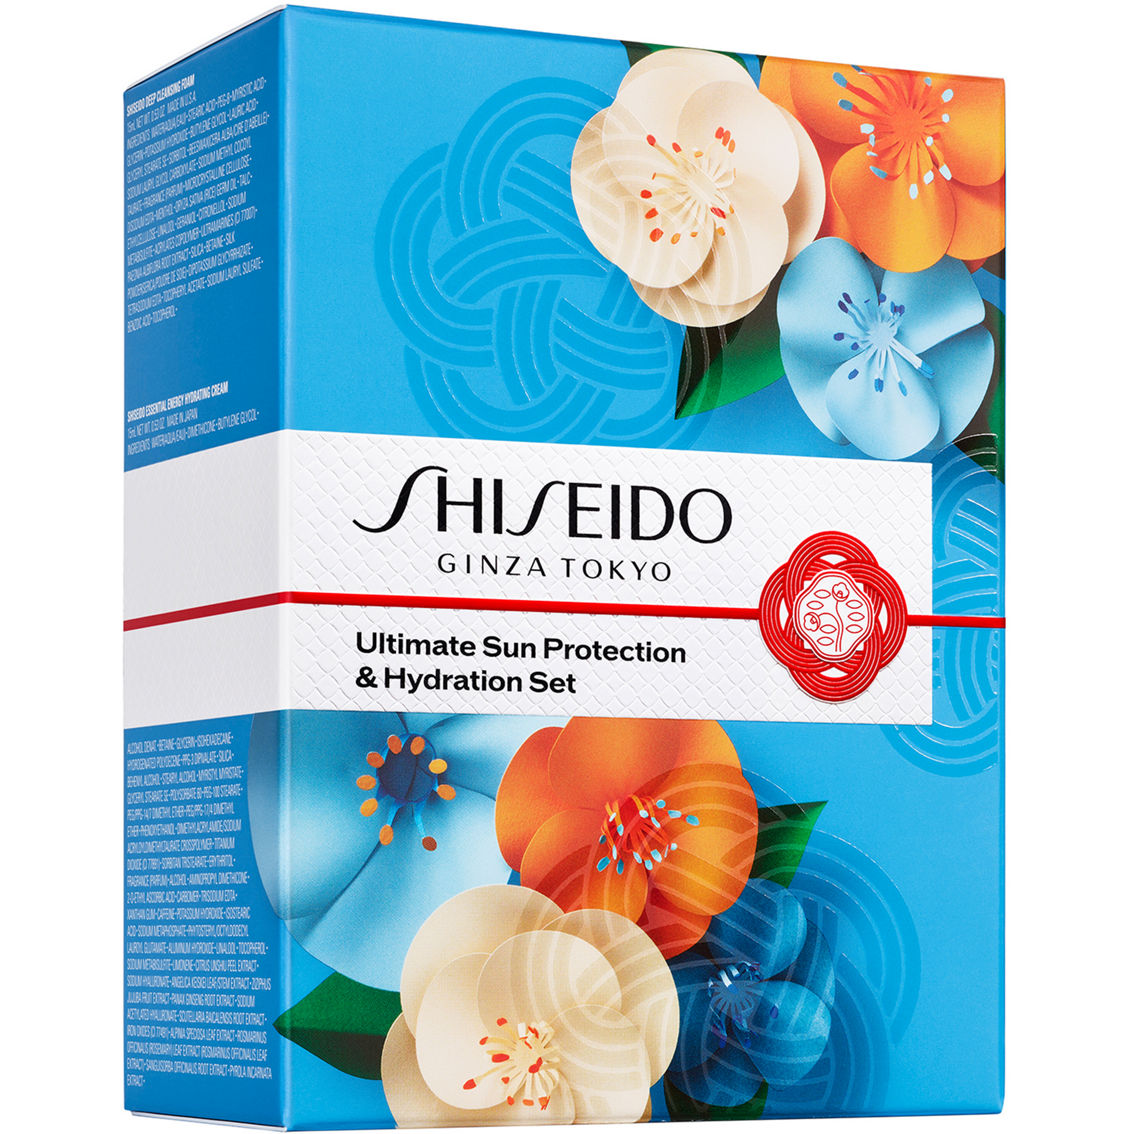 Shiseido Ultimate Sun Protection & Hydration Set - Image 3 of 3